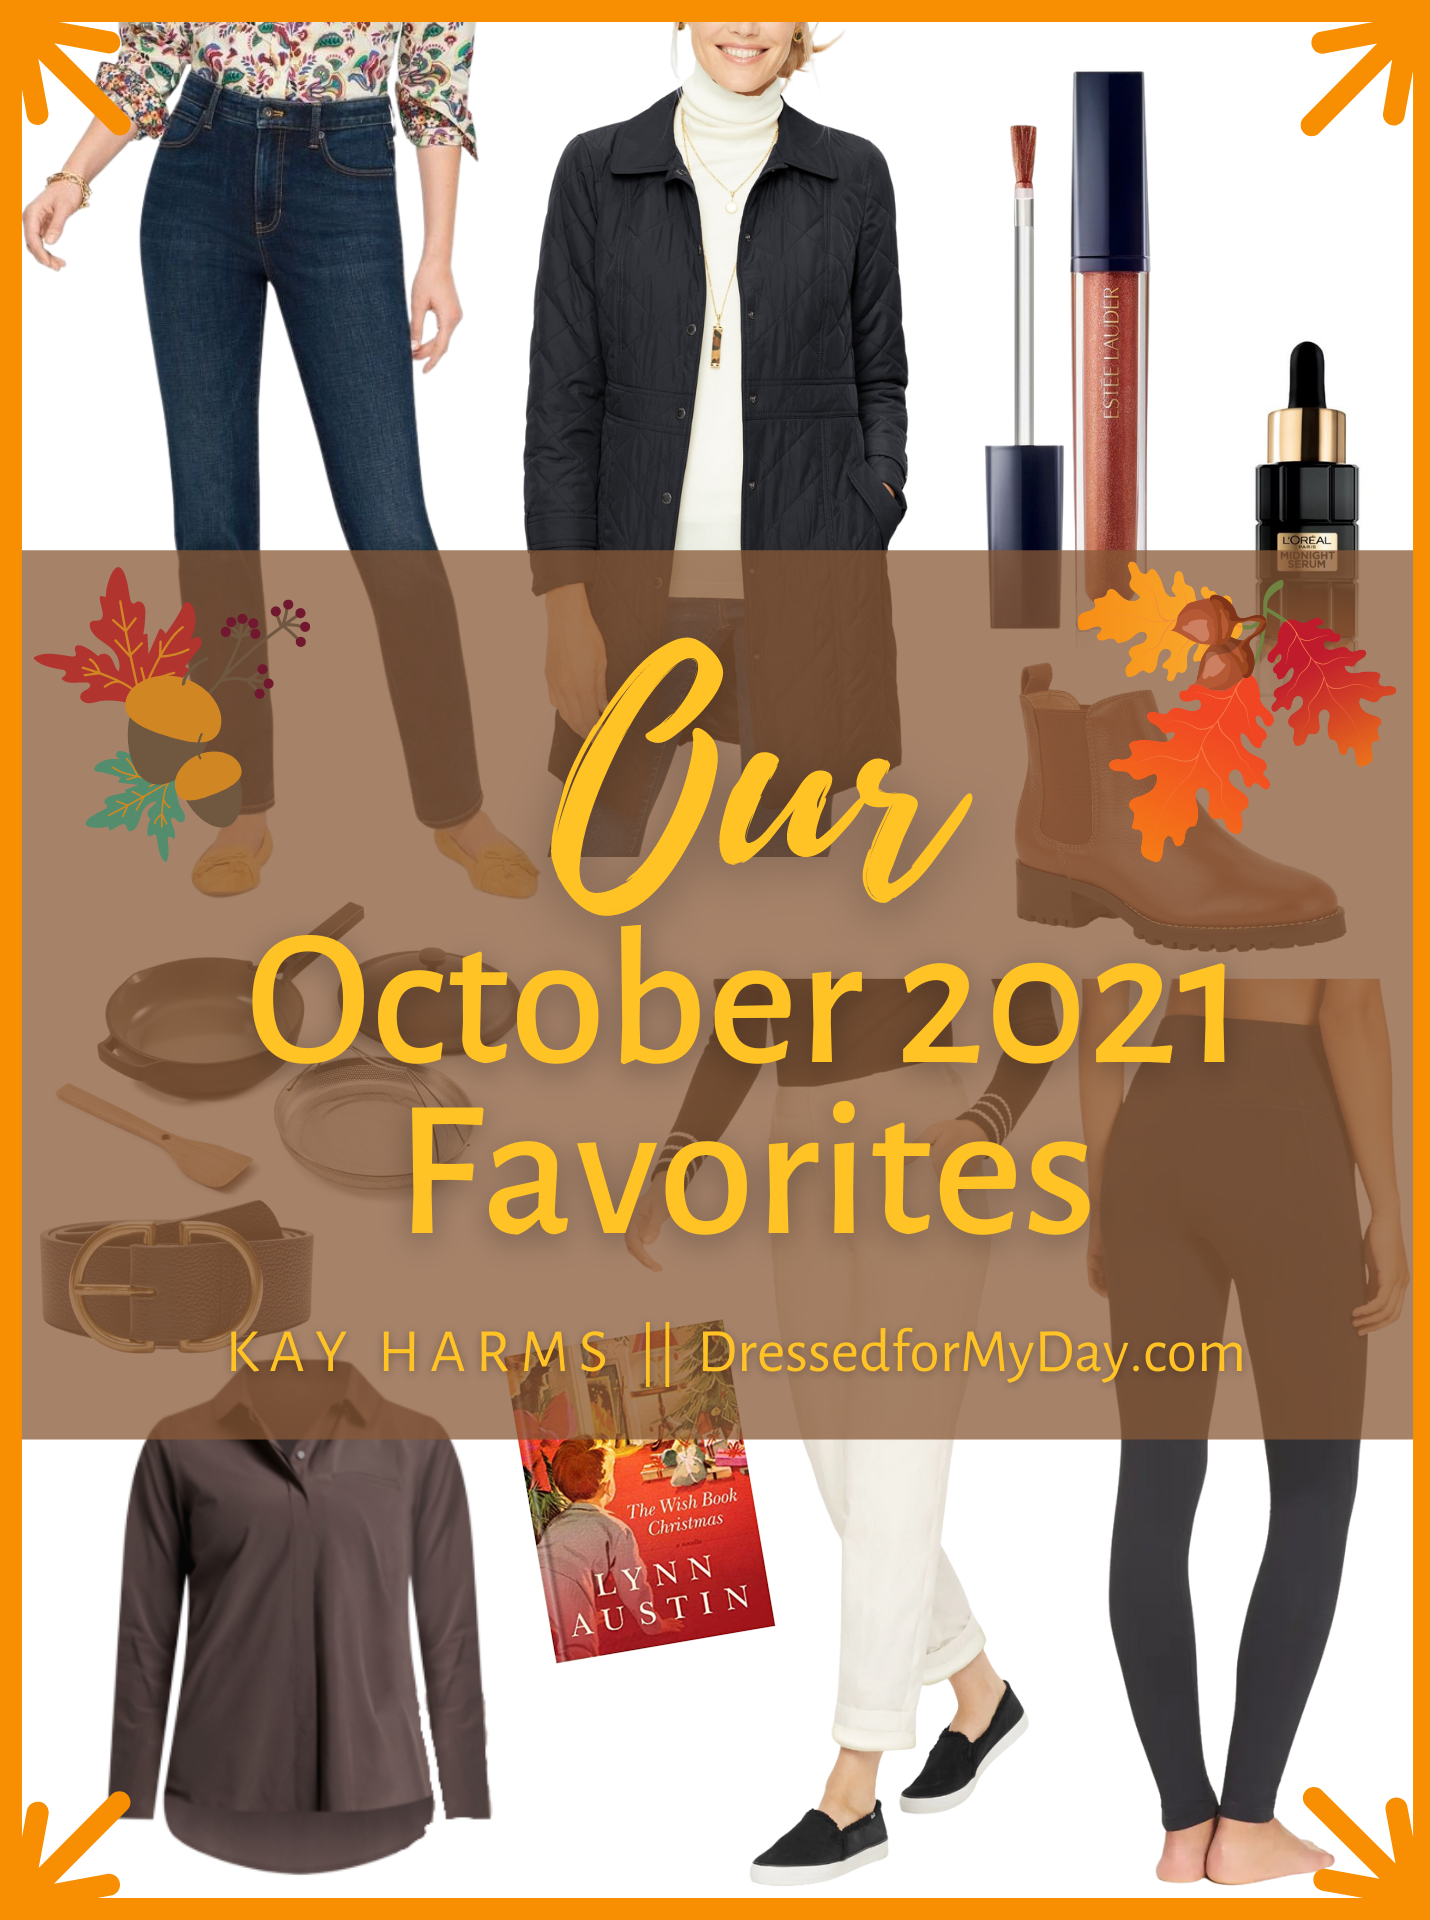 Our October 2021 Favorites